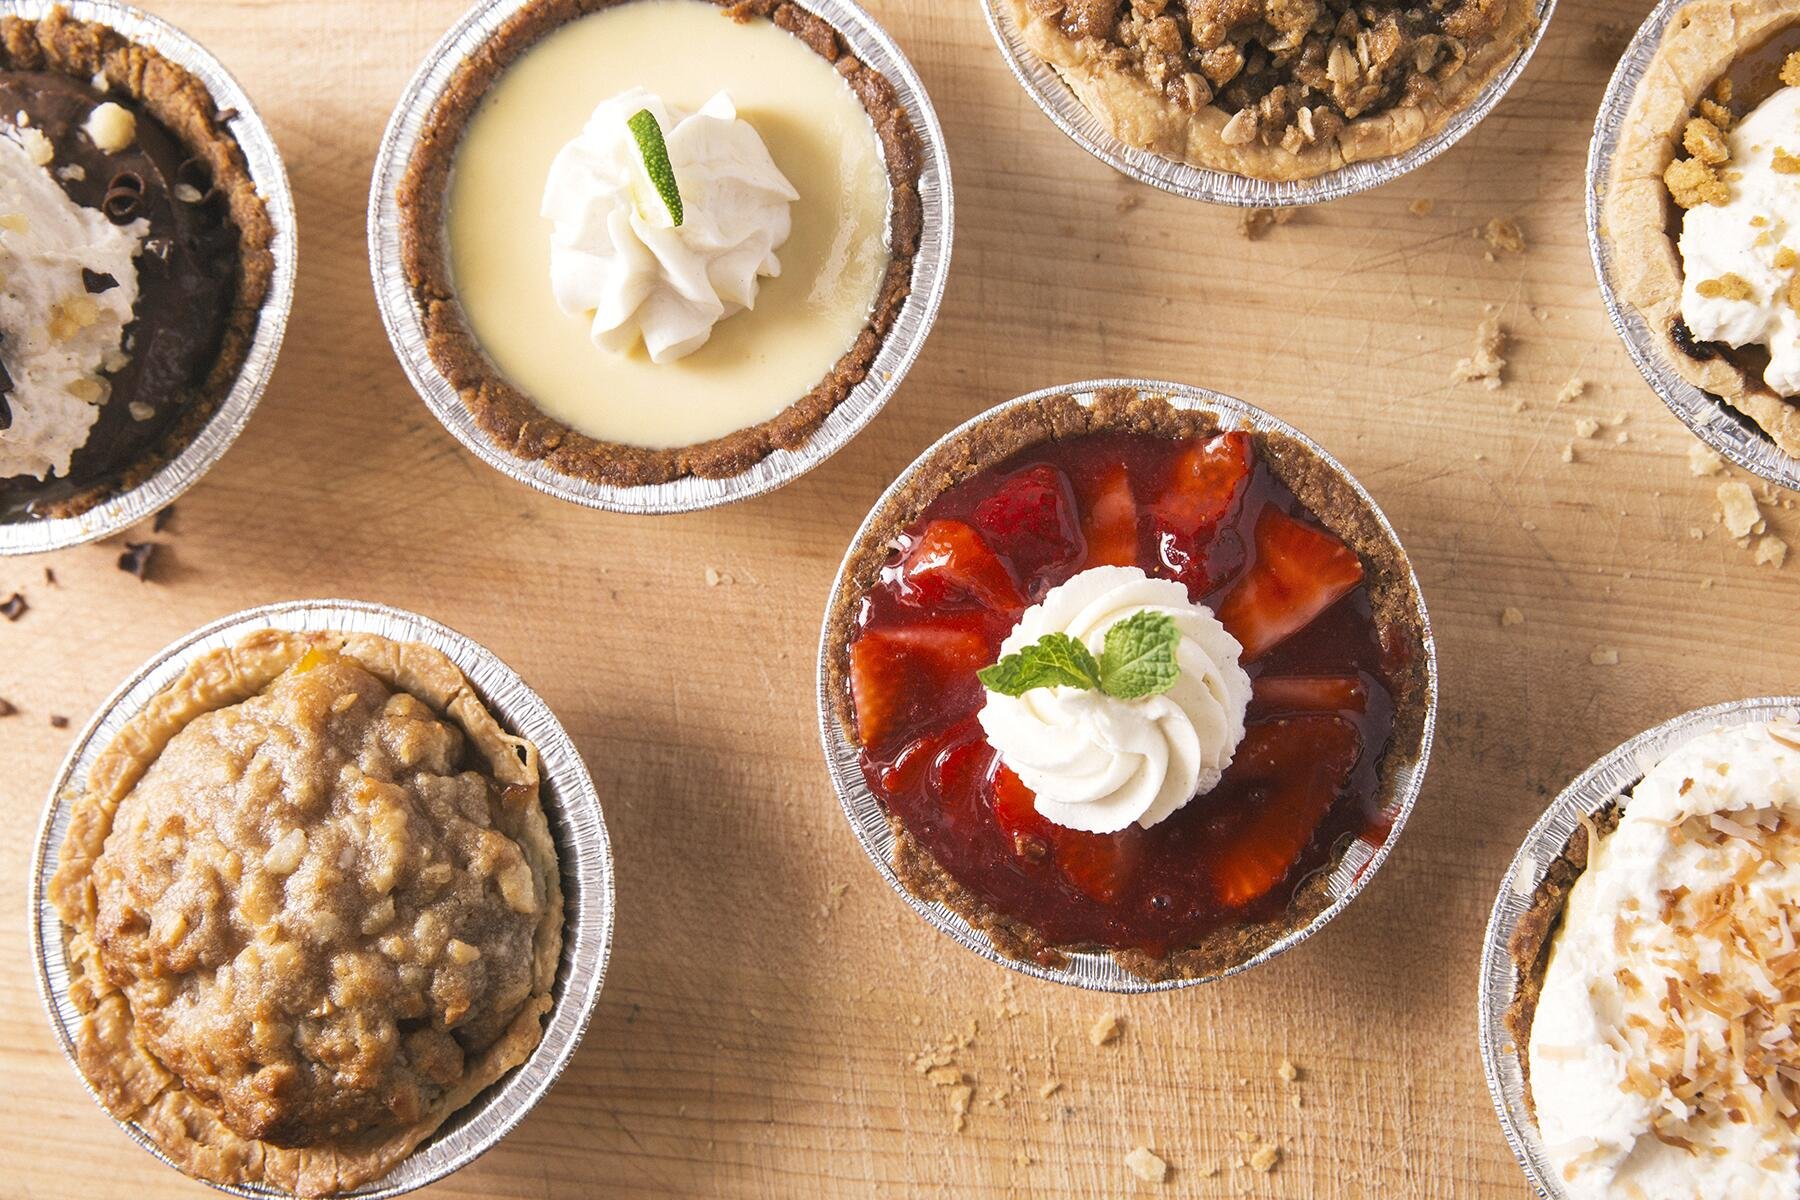 The 10 Best Pie Shops in America